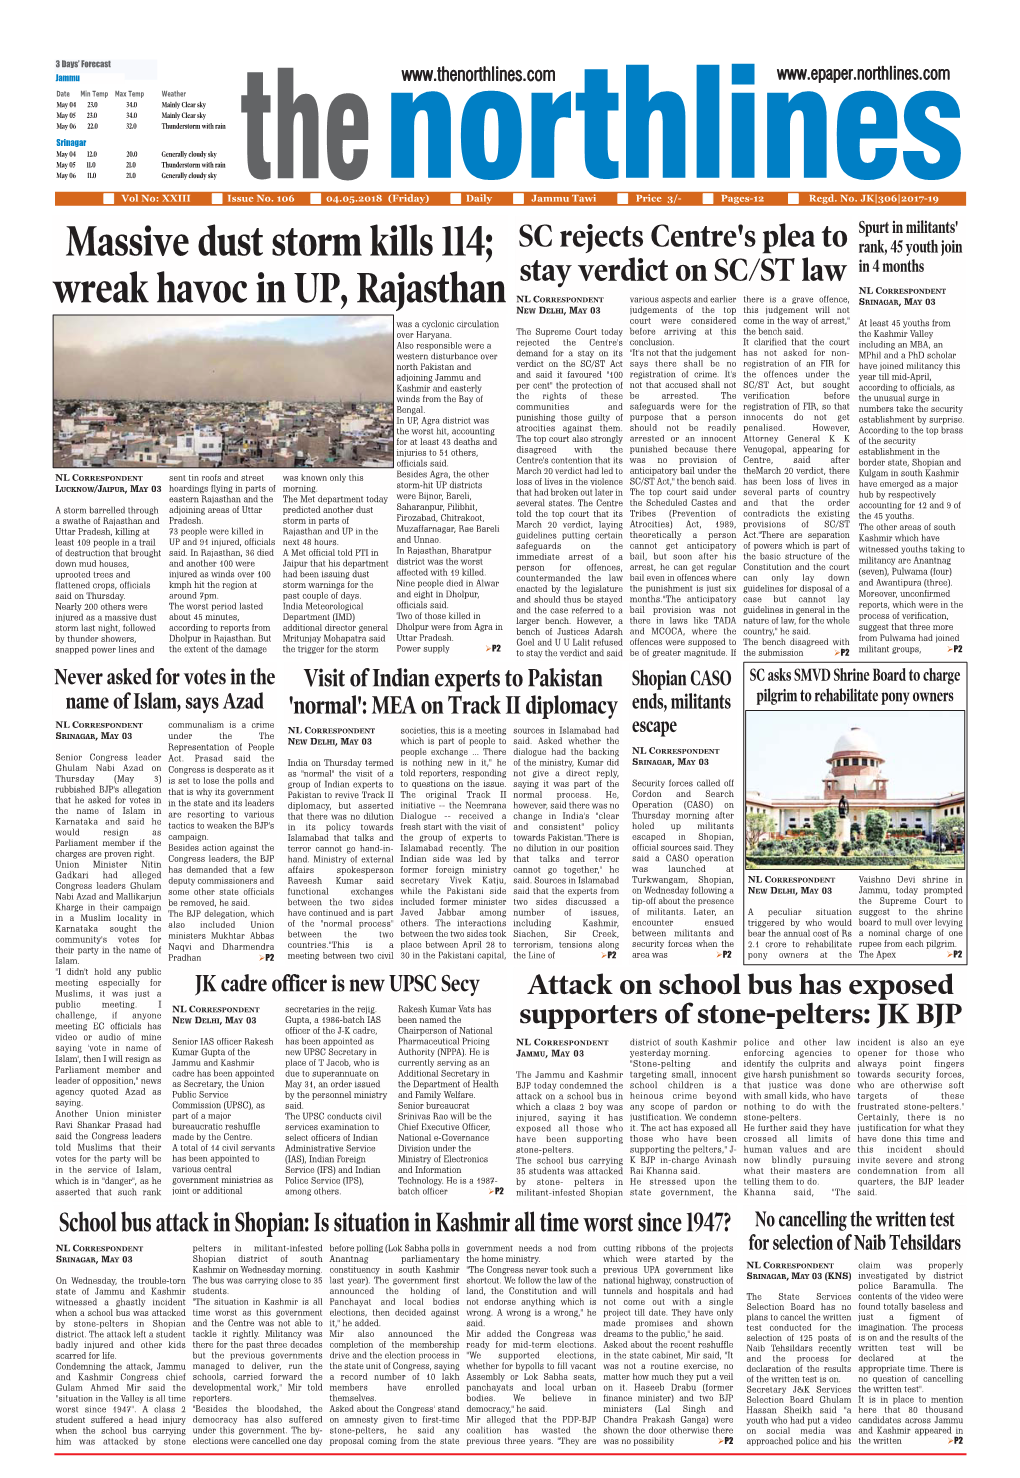 Wreak Havoc in UP, Rajasthan